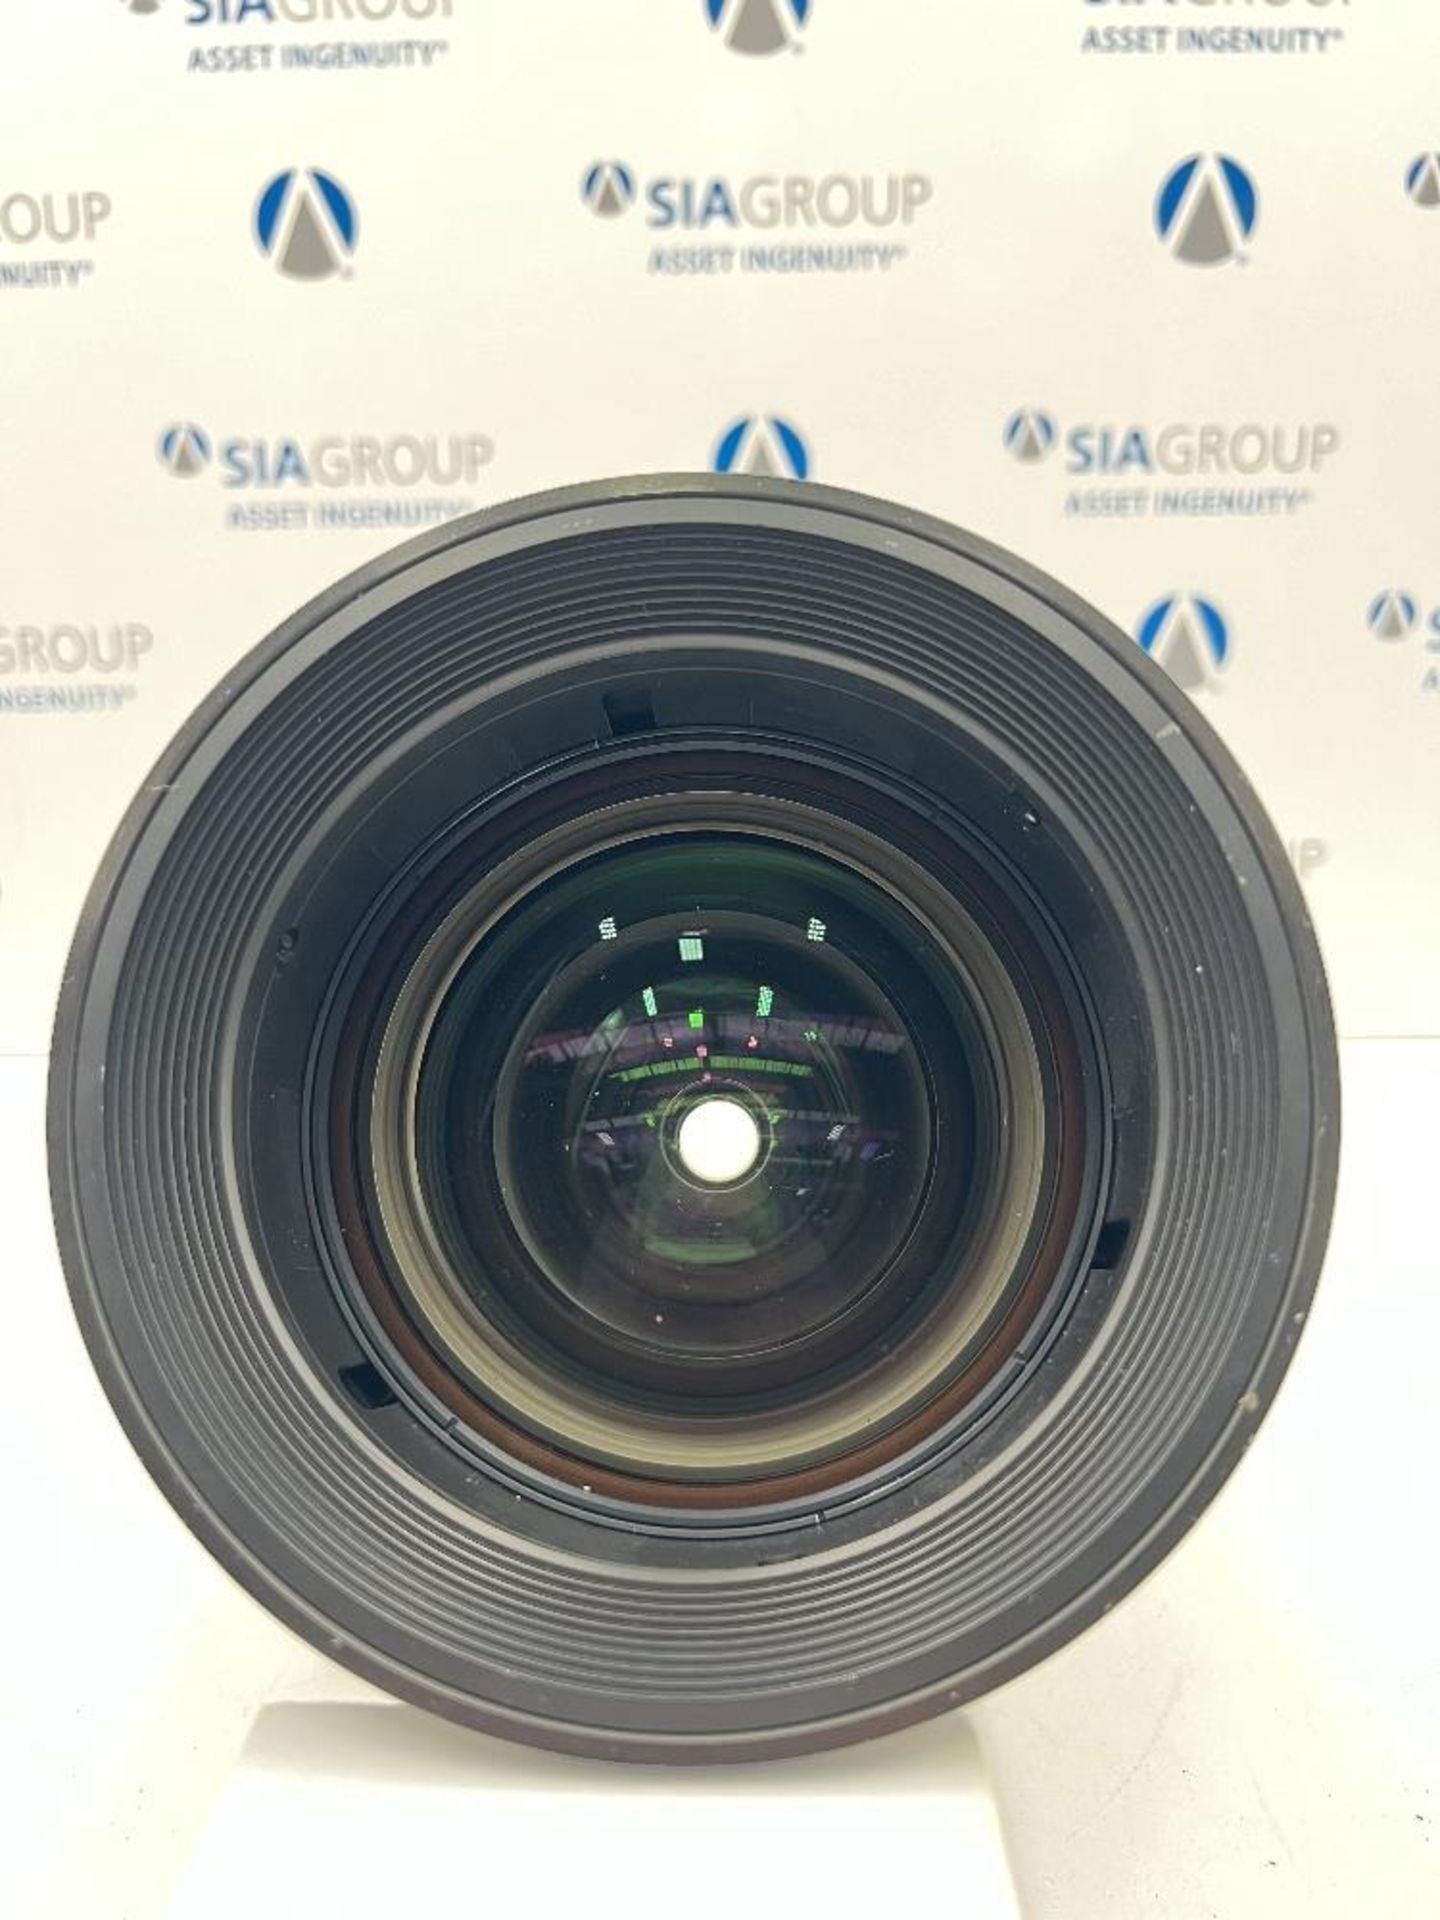 Panasonic ET-D75LE10 1.3-1.7 Zoom Lens With Carrier Case - Image 7 of 10